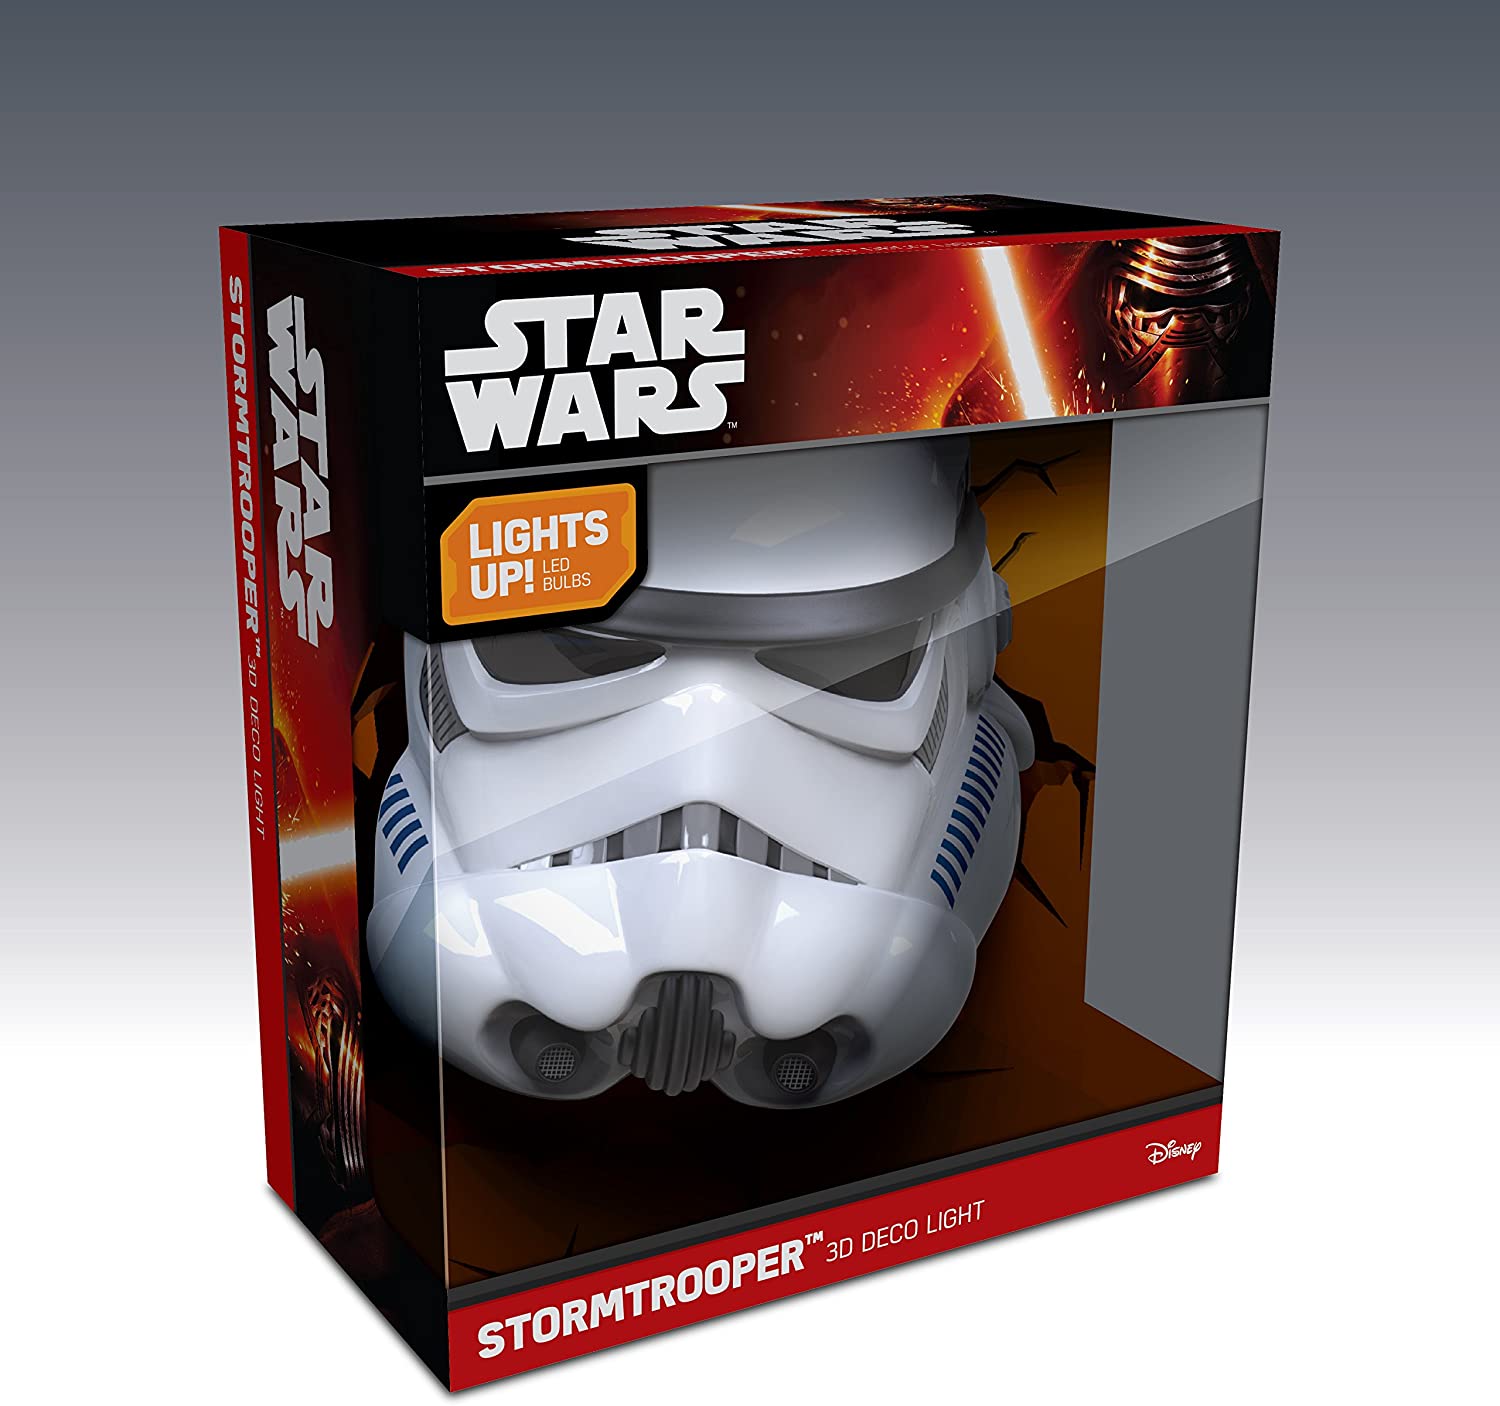 Star Wars Stormtrooper 3D Deco Light